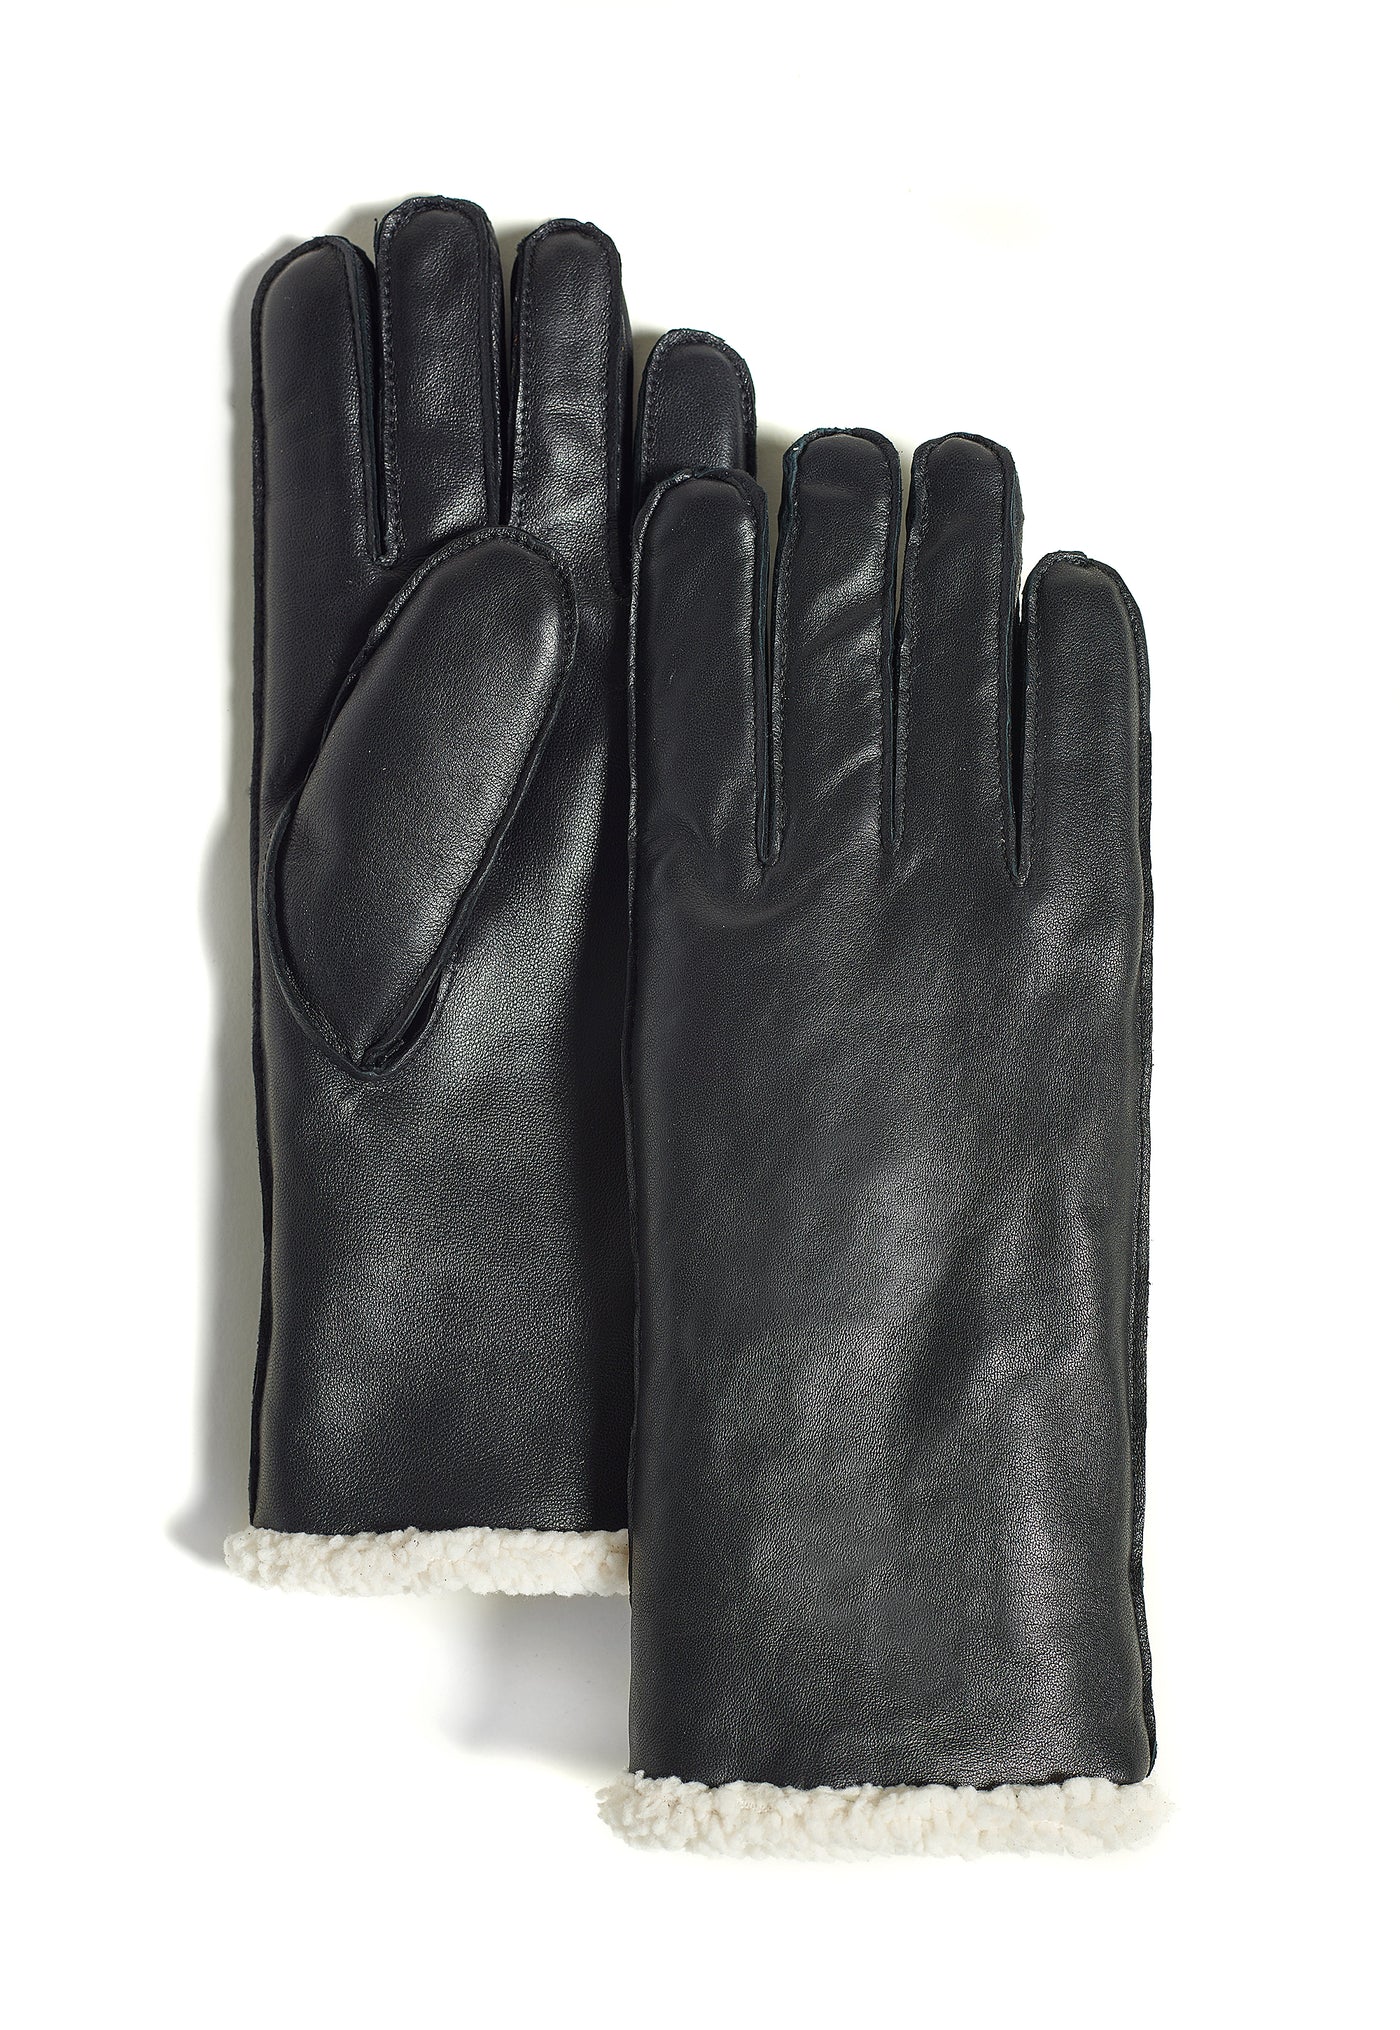 Duncan Glove